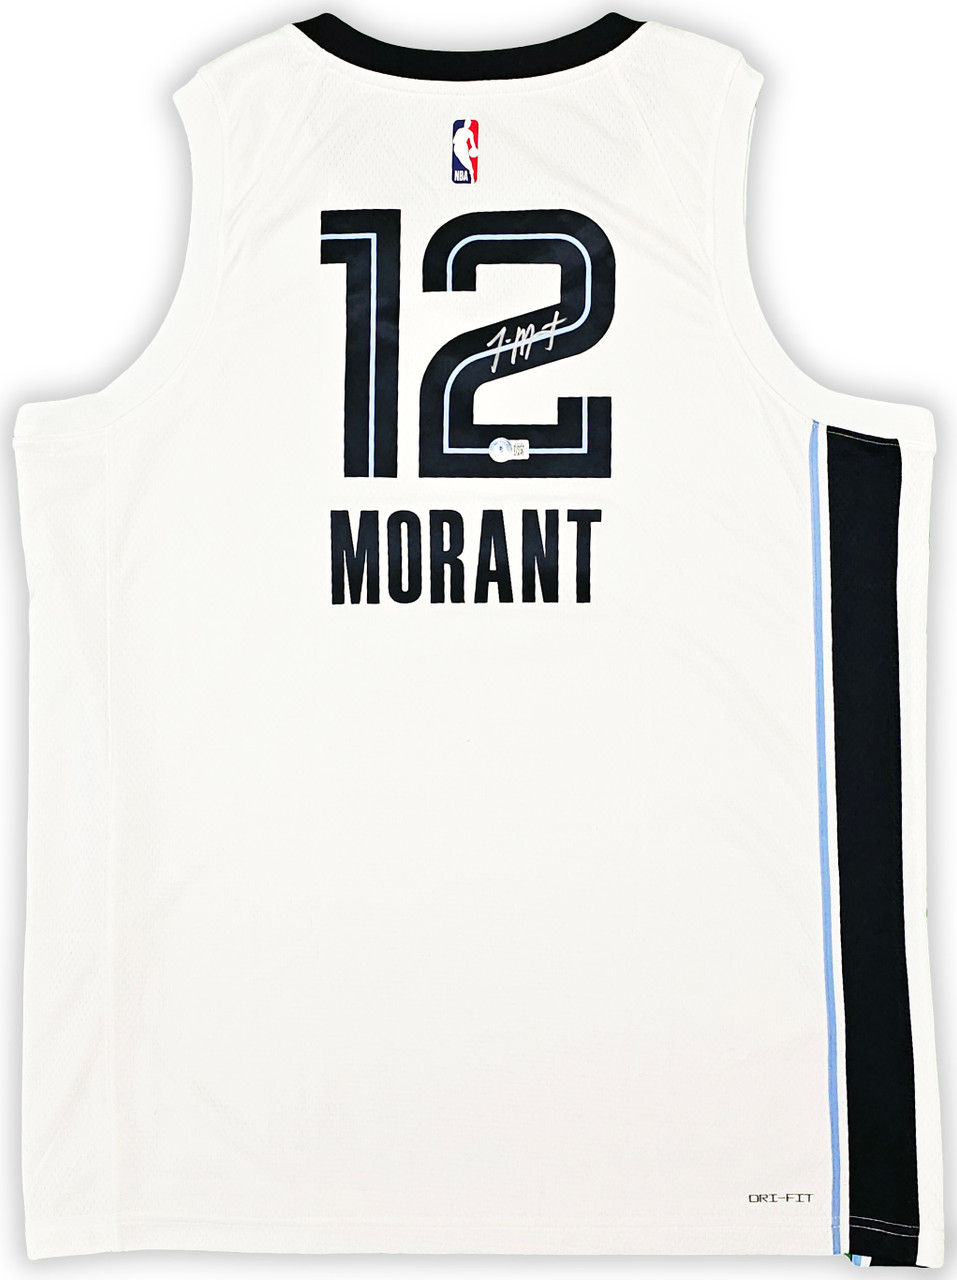 Ja Morant Autographed Composite Leather Memphis Grizzlies Logo Basketball  Beckett BAS QR Stock #218618 - Mill Creek Sports